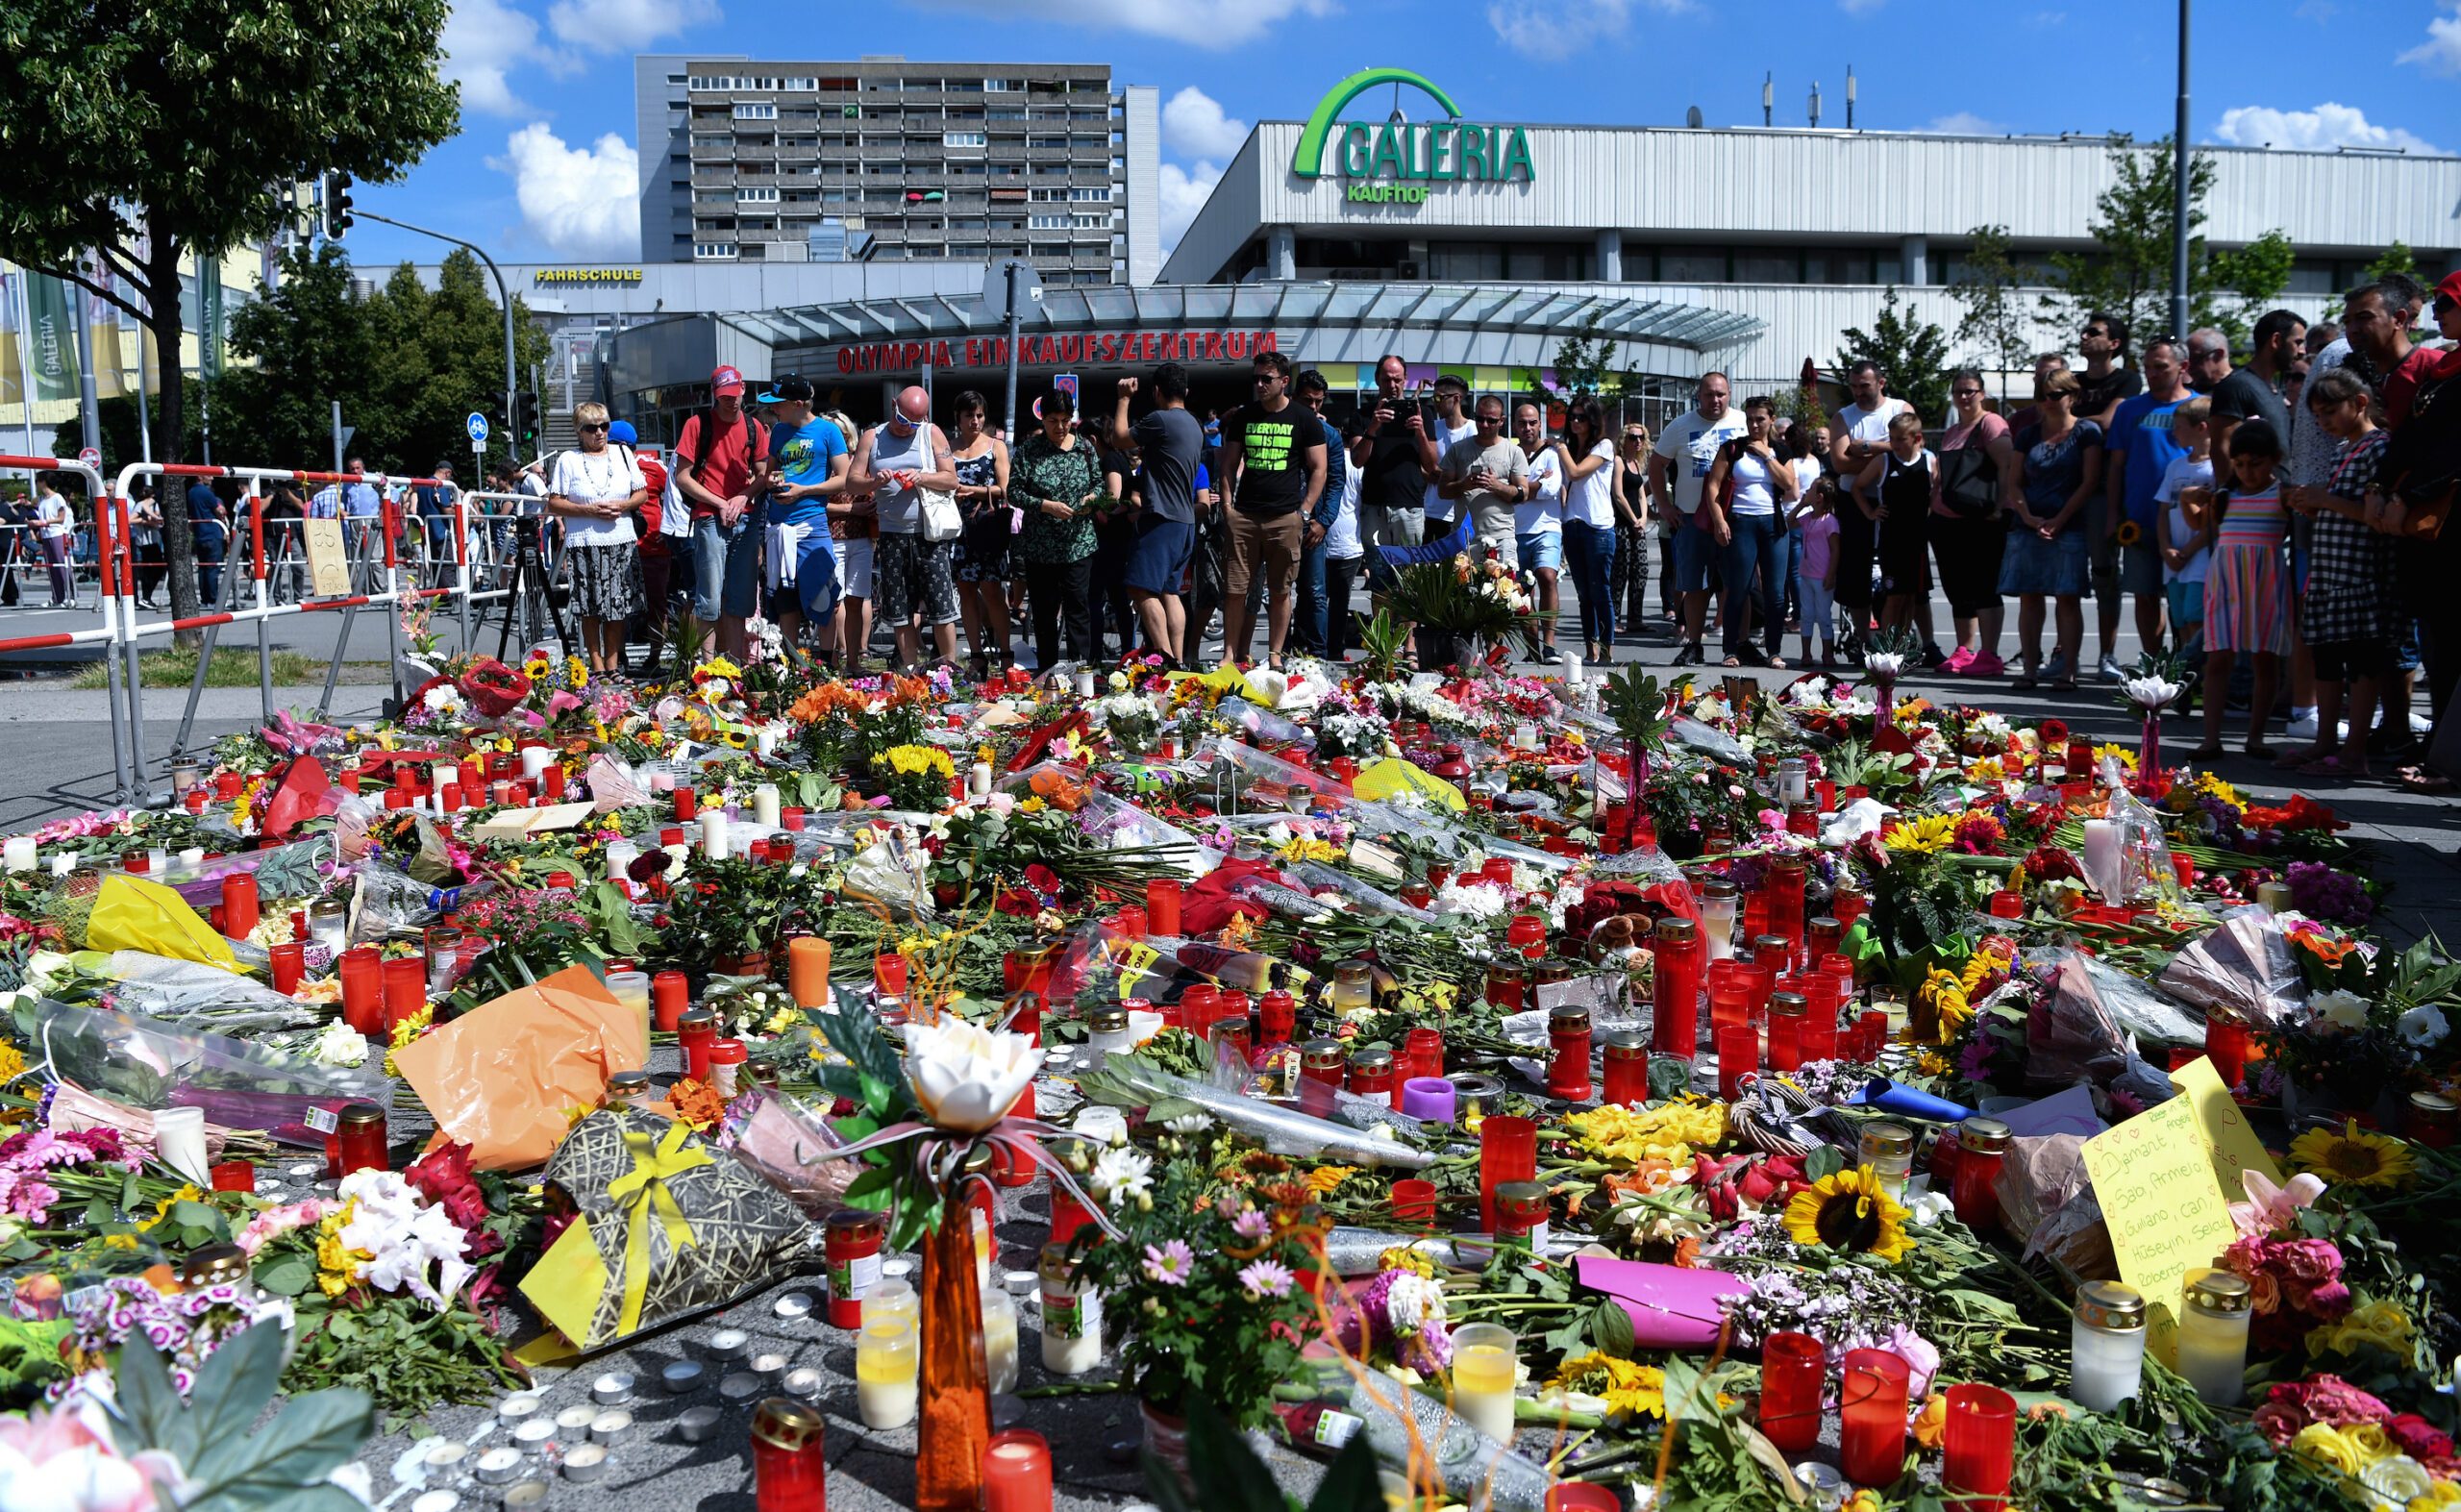 Munich gunman ‘planned shooting for a year’